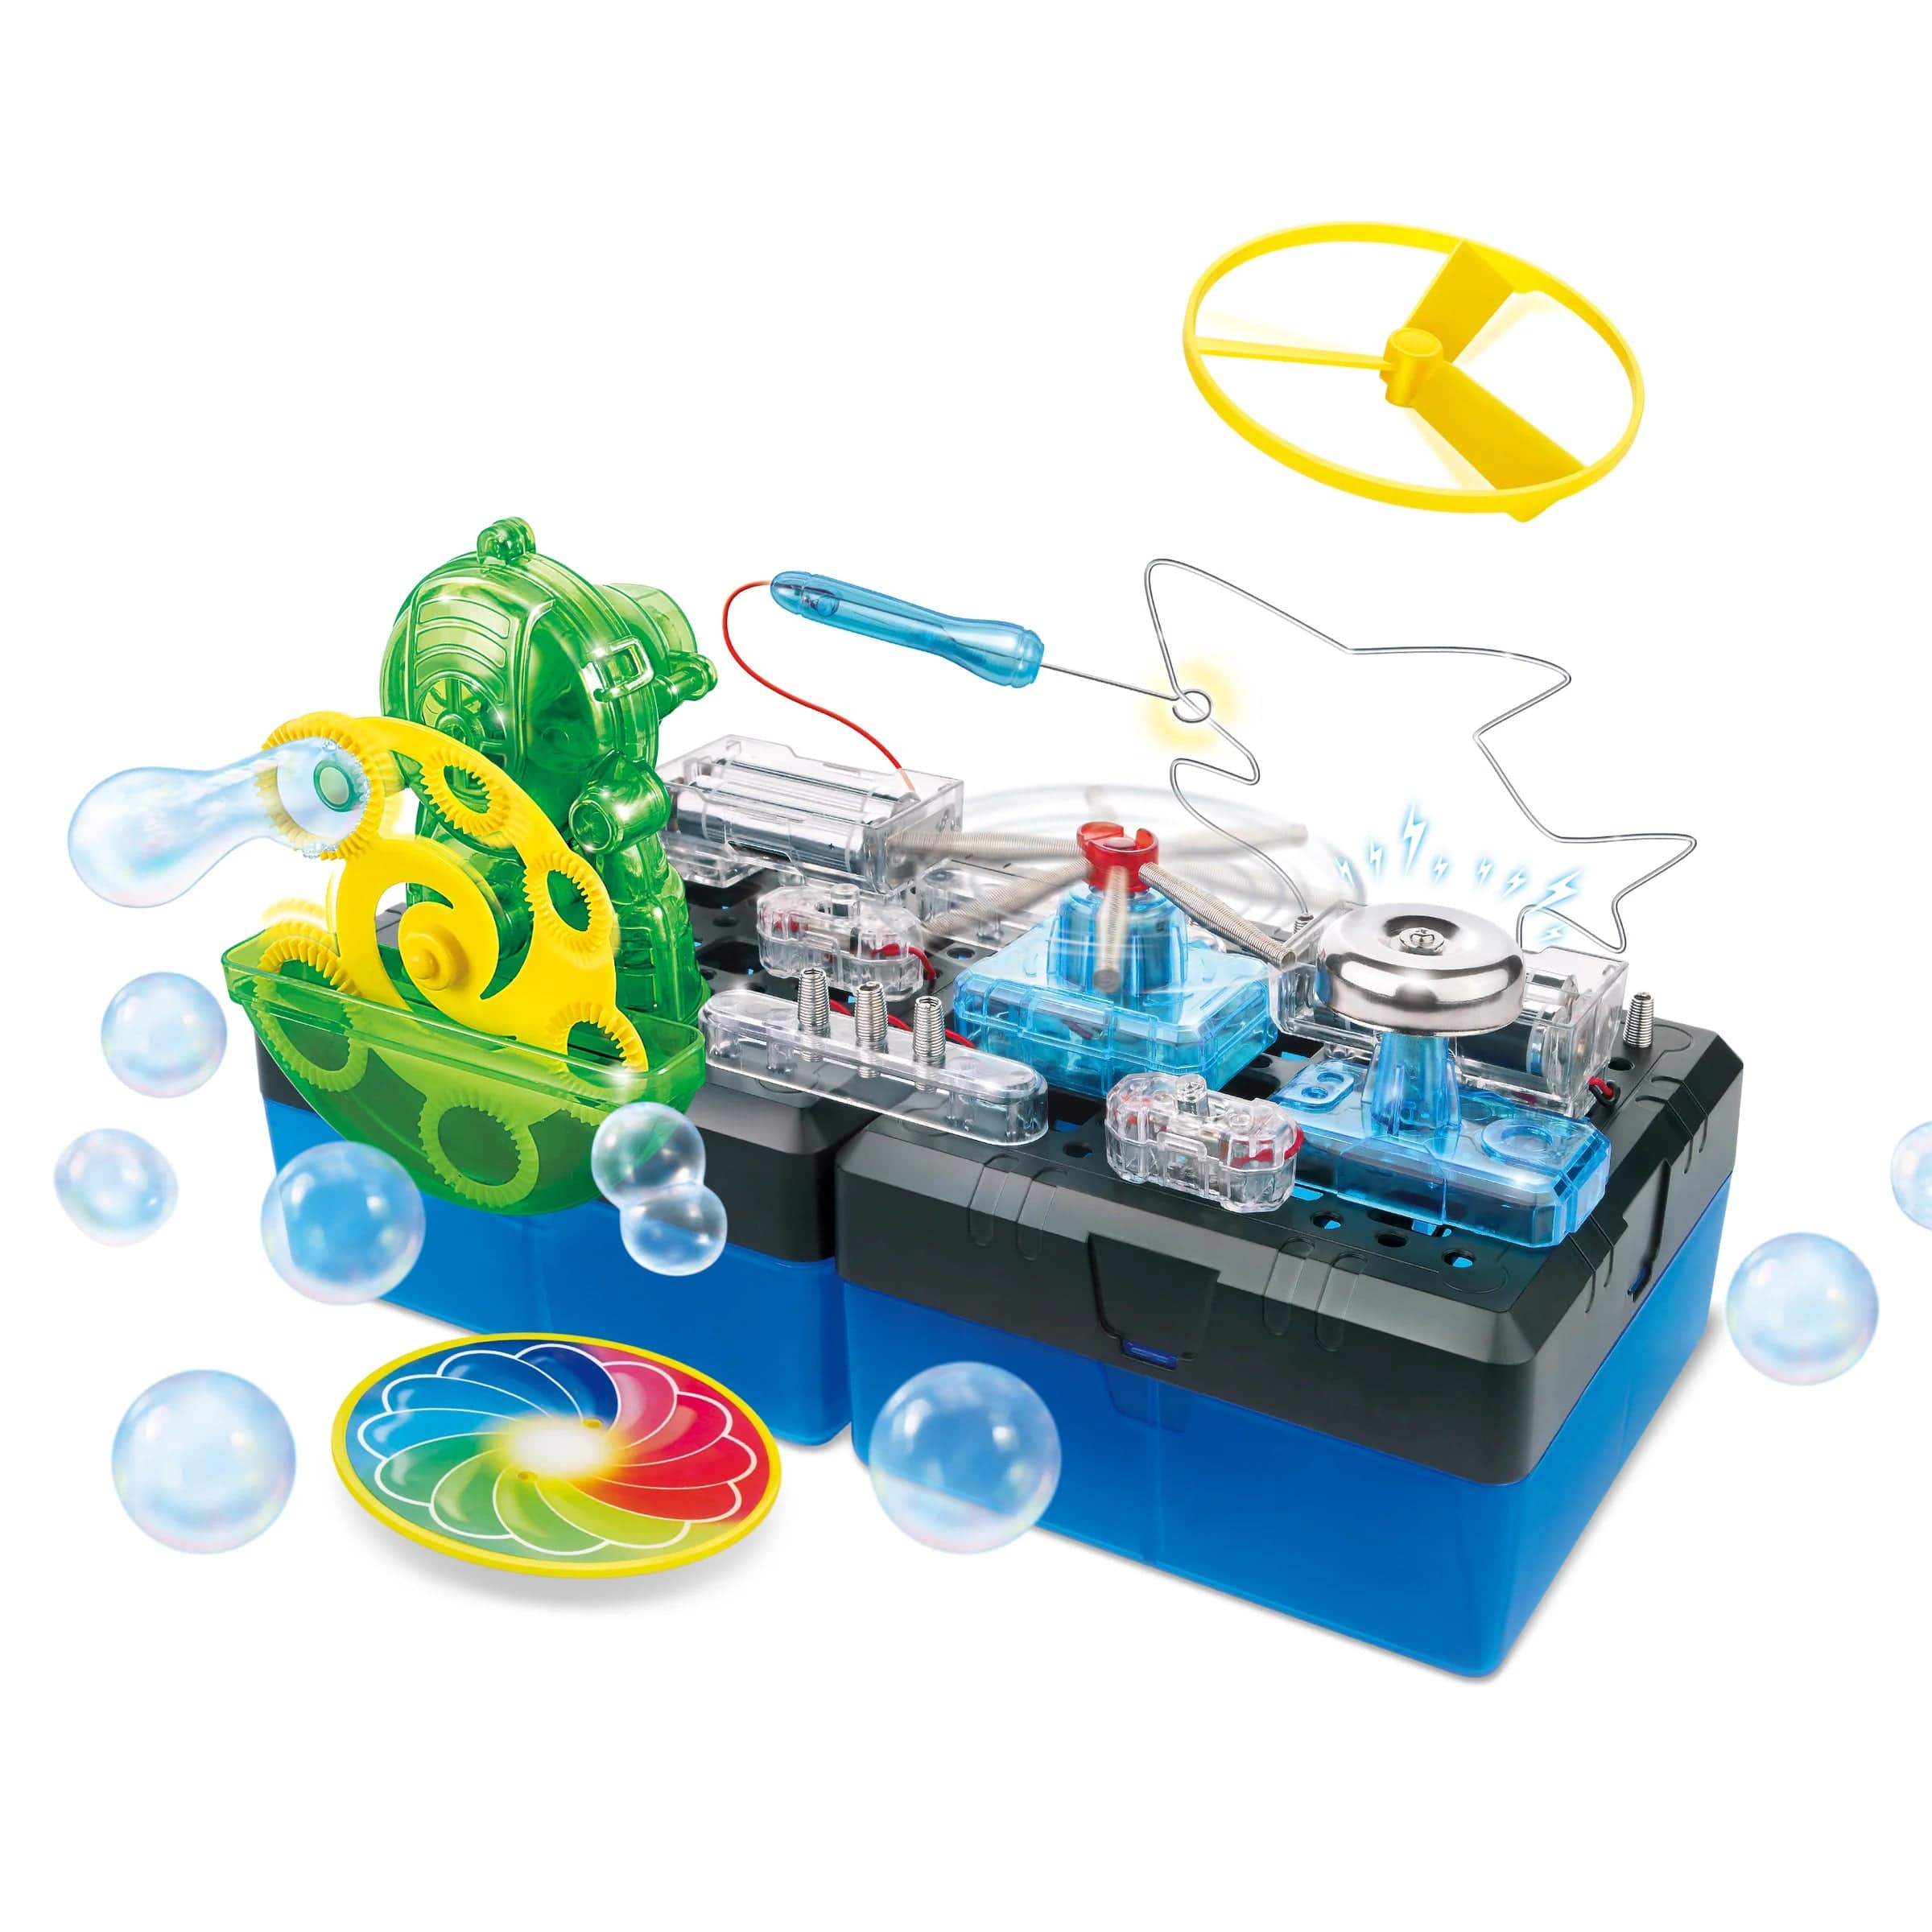 Explore Science Toy Explore Science 14 Electronic Science Set - STEM - 88-90135